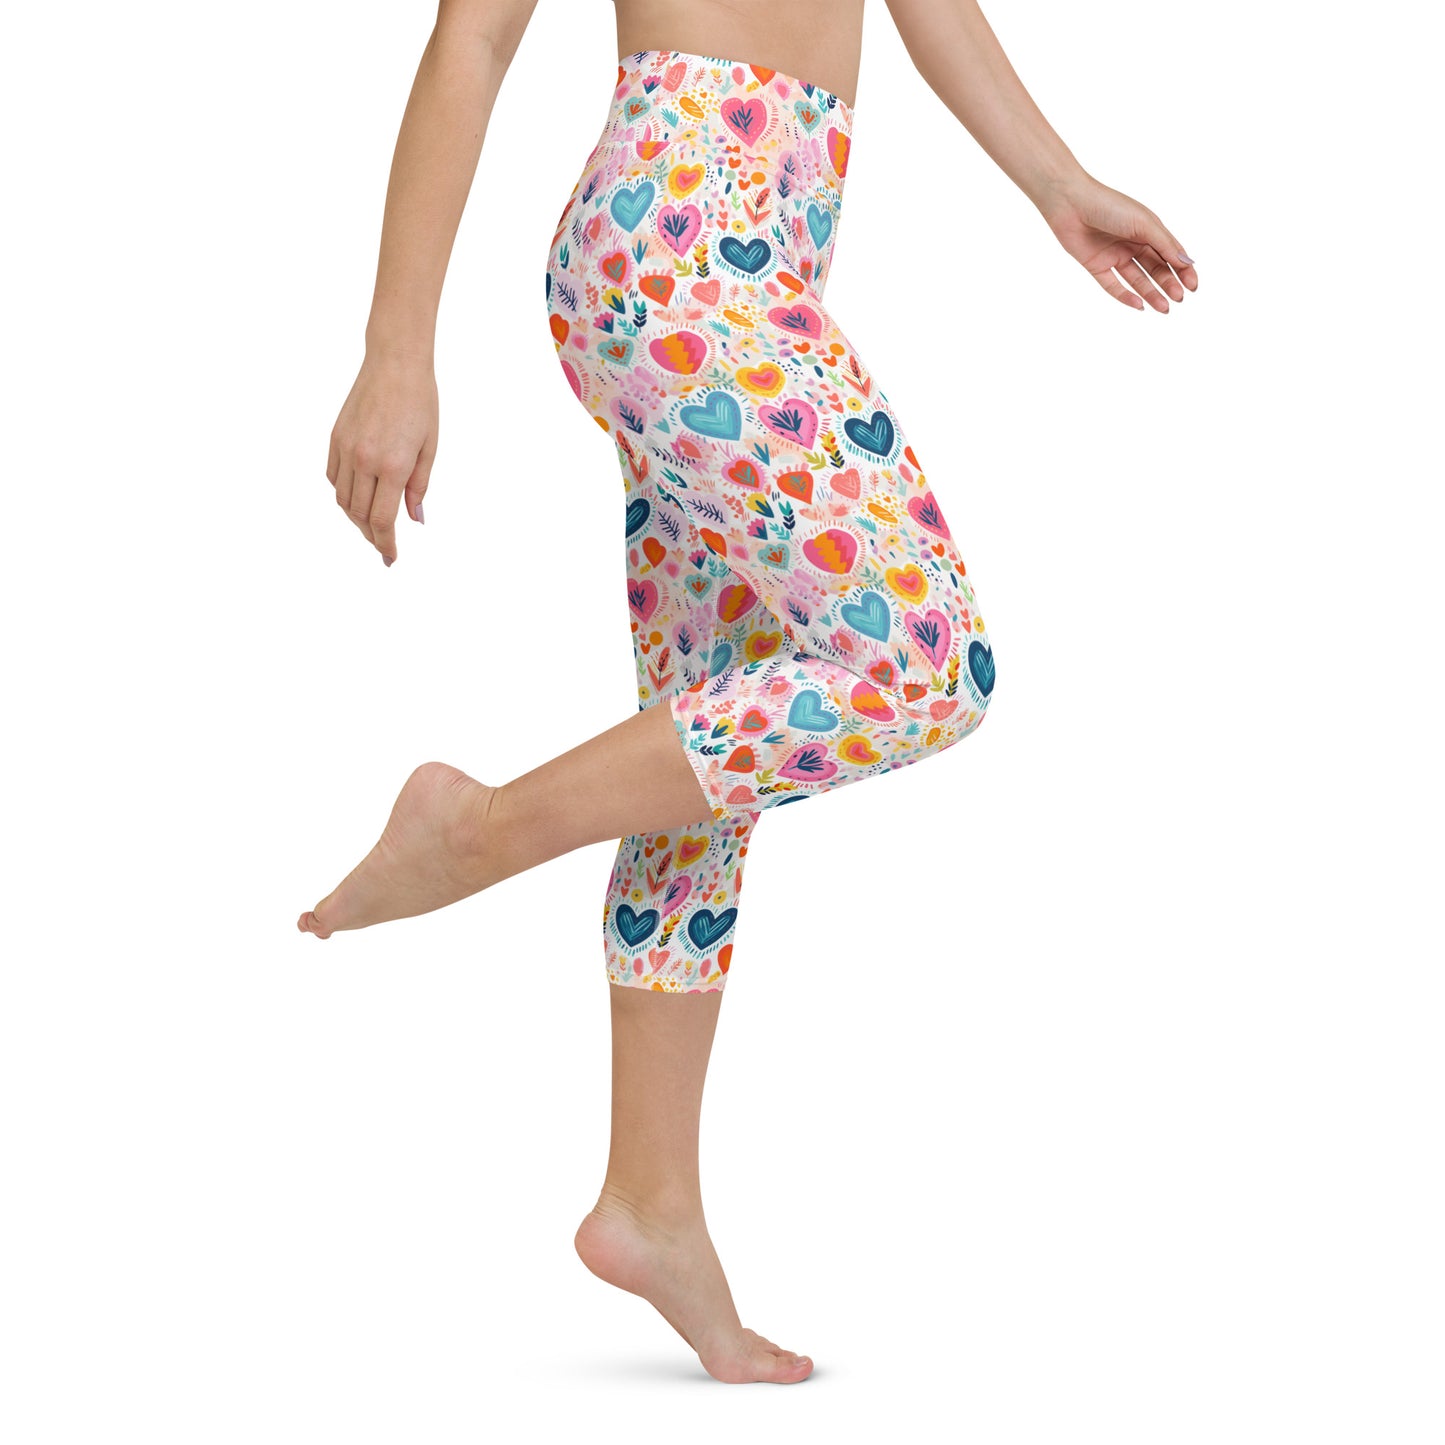 Schnucki Capri High Waist Yoga Leggings / Pants with Inside Pocket